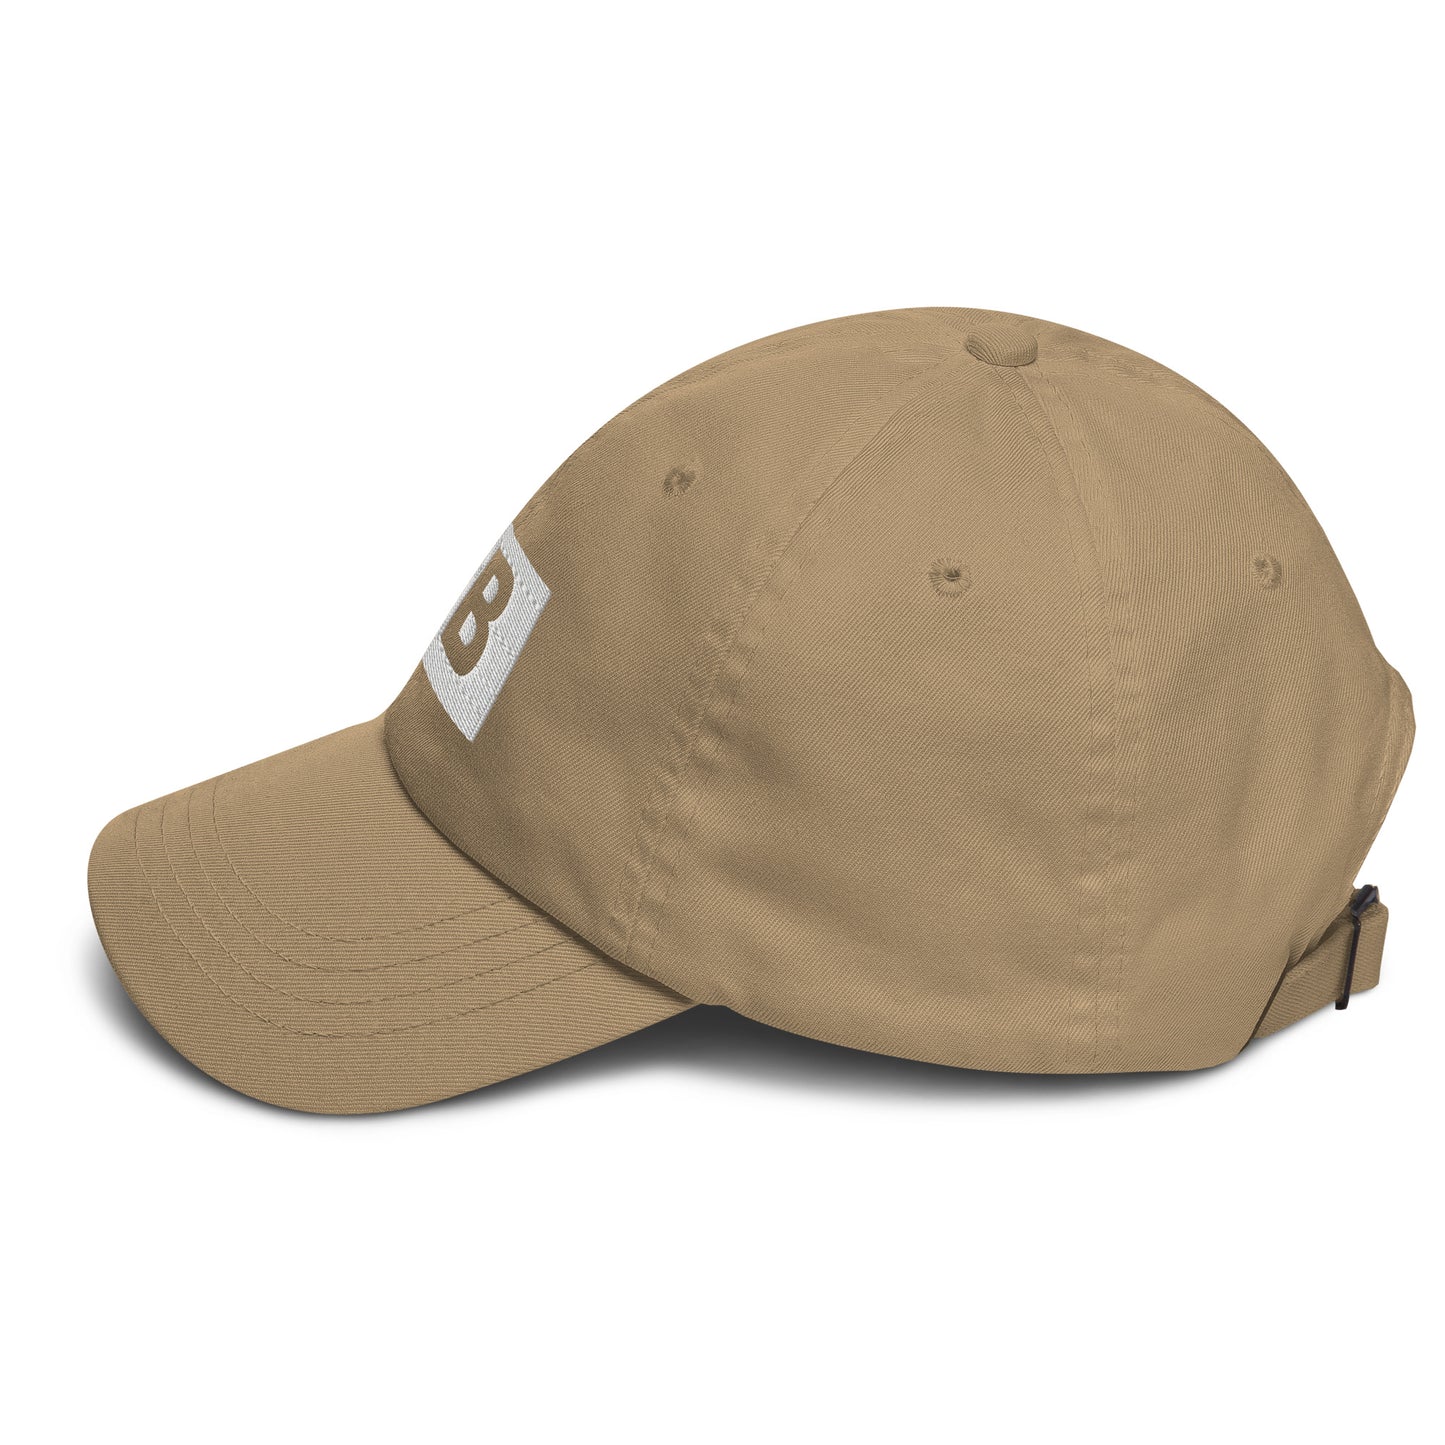 White *GB* Logo hat